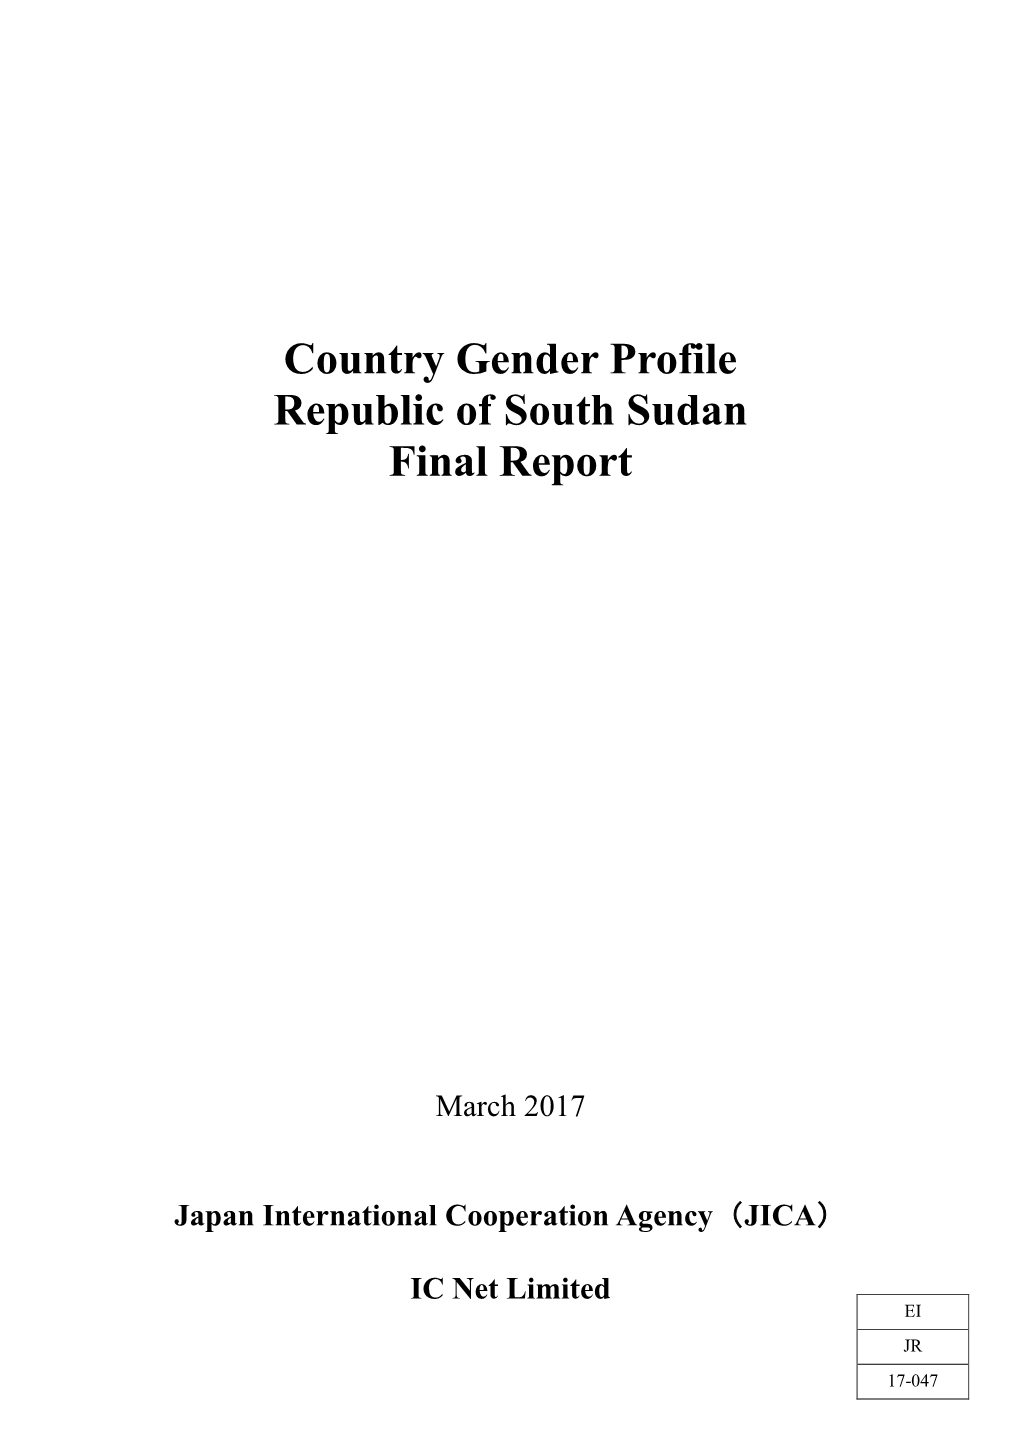 Country Gender Profile Republic of South Sudan Final Report